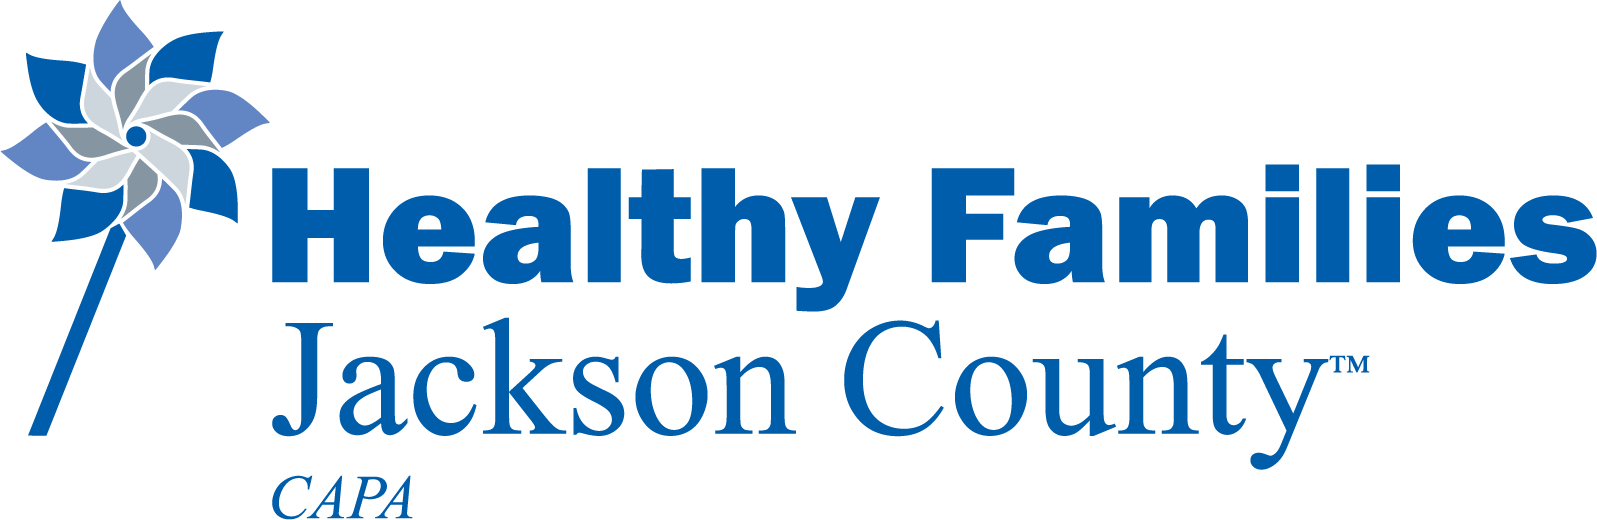 Healthy Families Jackson County CAPA Logo - Blue